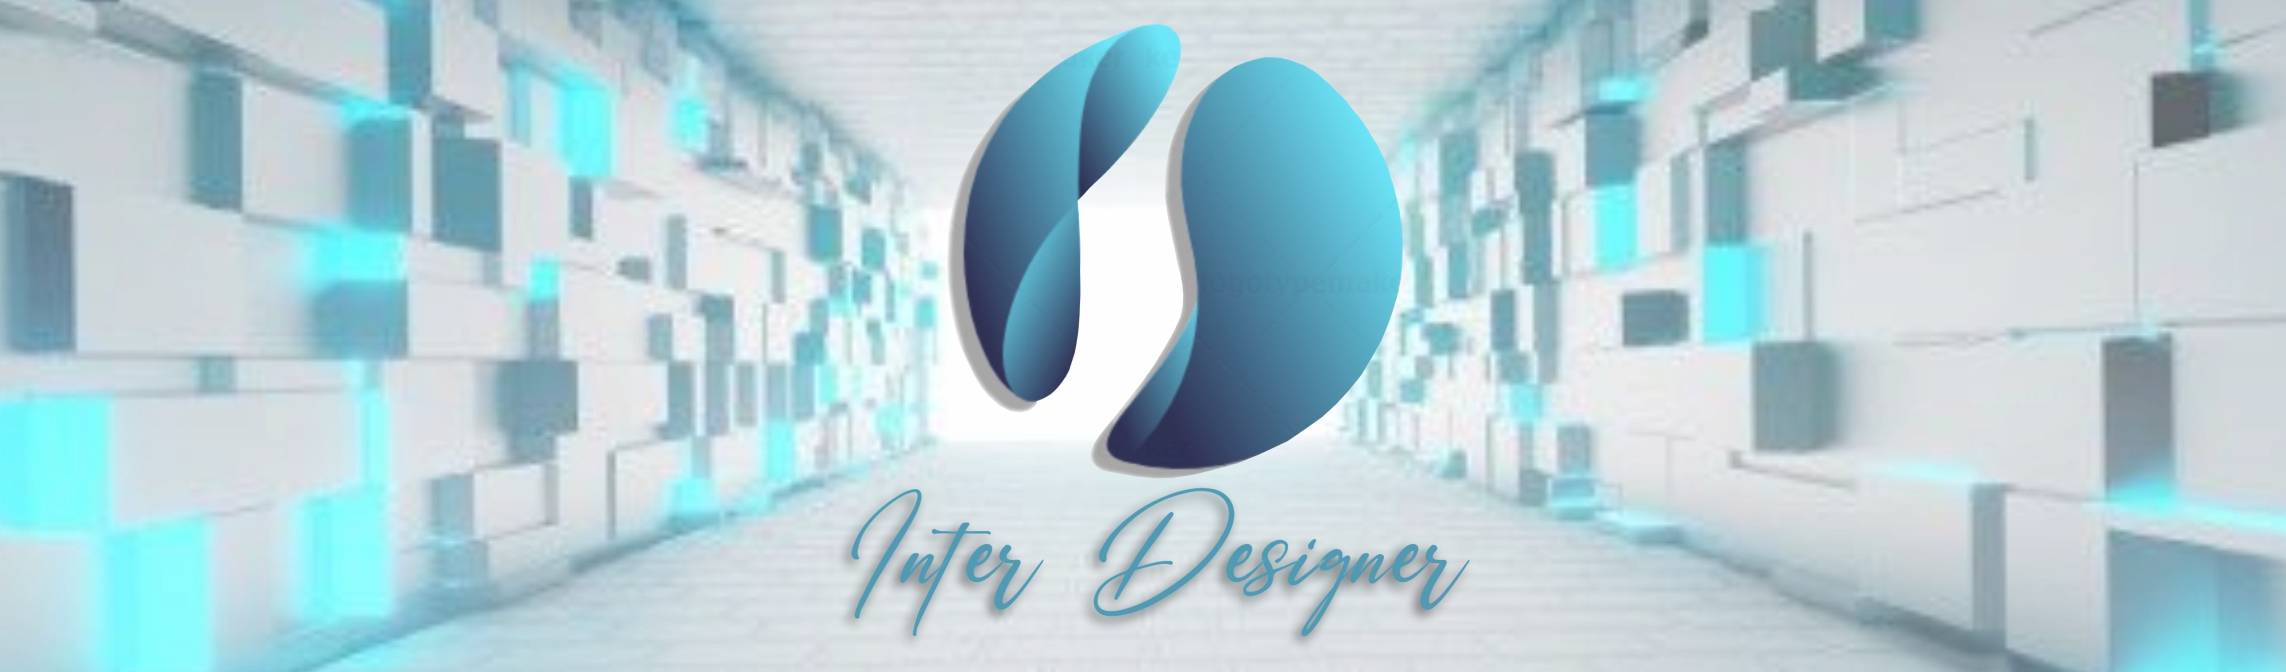 Inter Designer